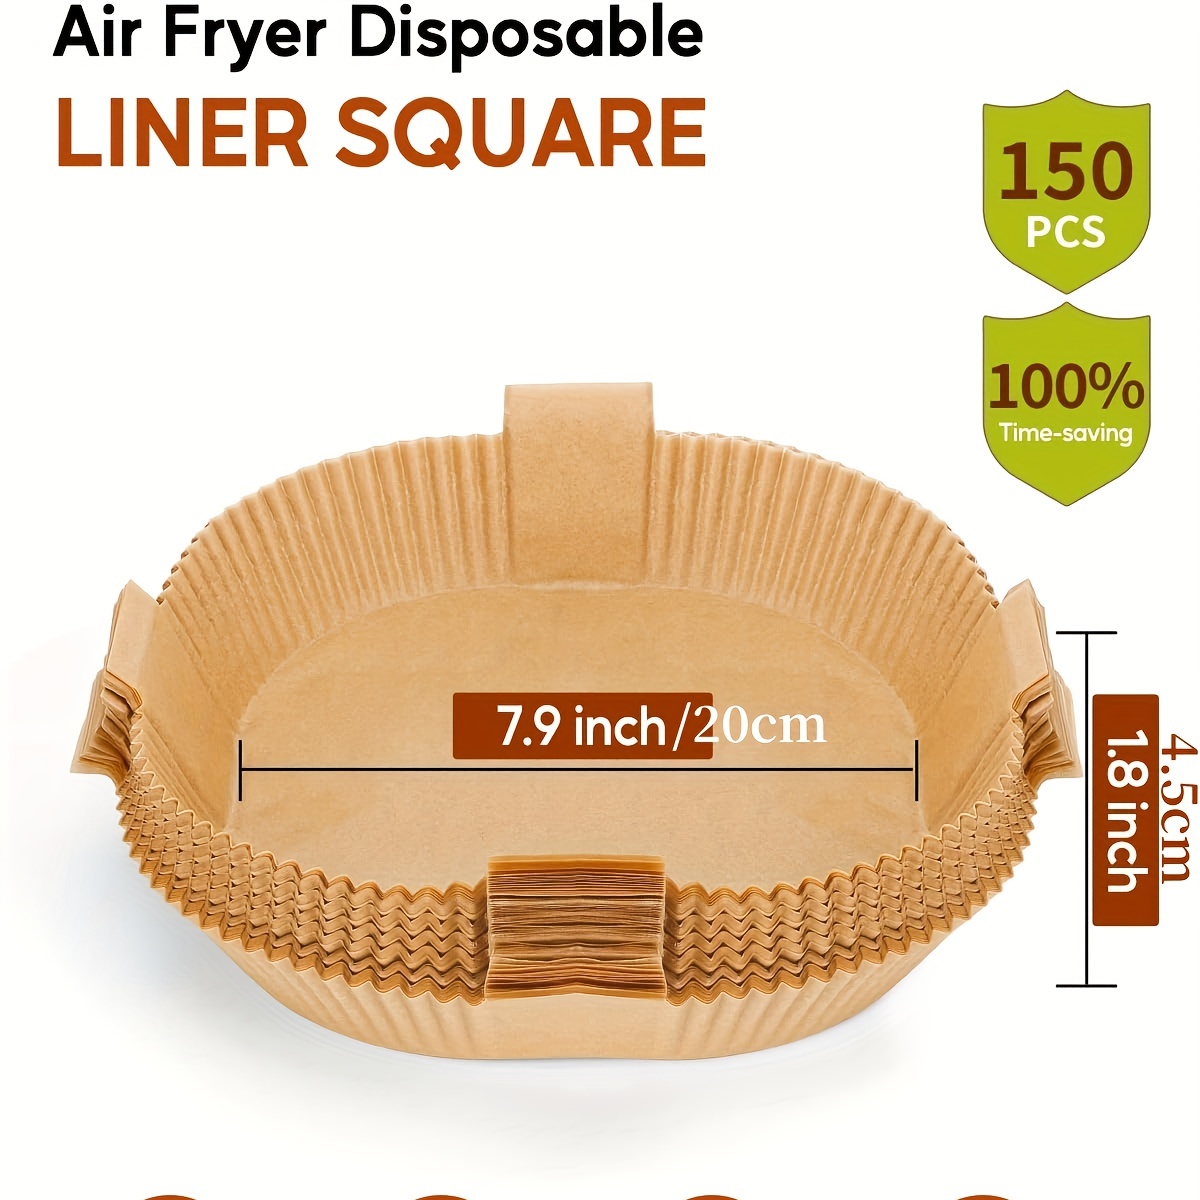 Katbite 130PCS Disposable Air Fryer Paper Liners, 7.9 Inch Square Air